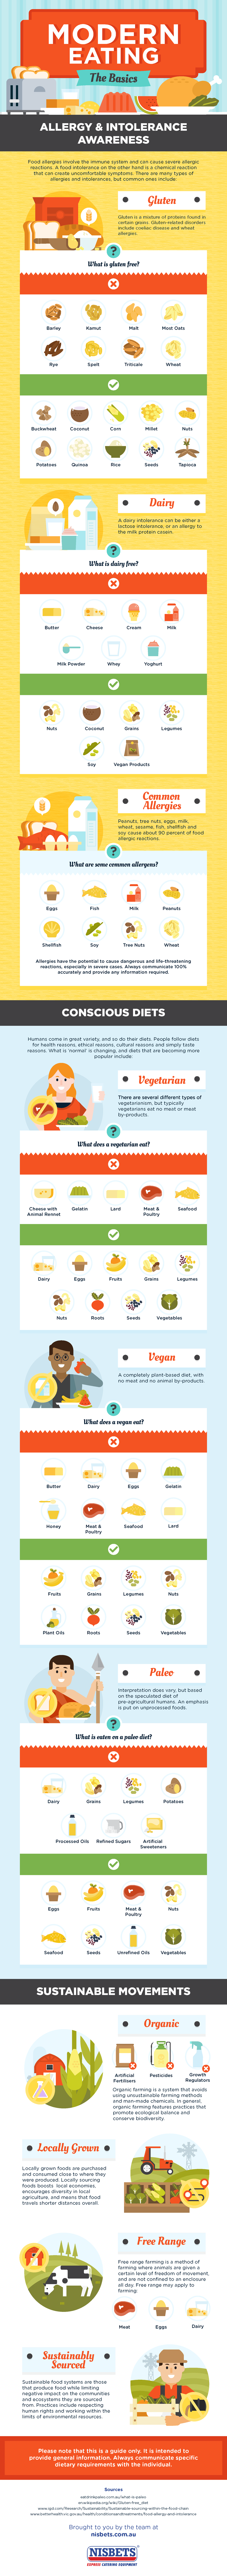 Understanding Dietary Requirements [Infographic] - Nutritionist 